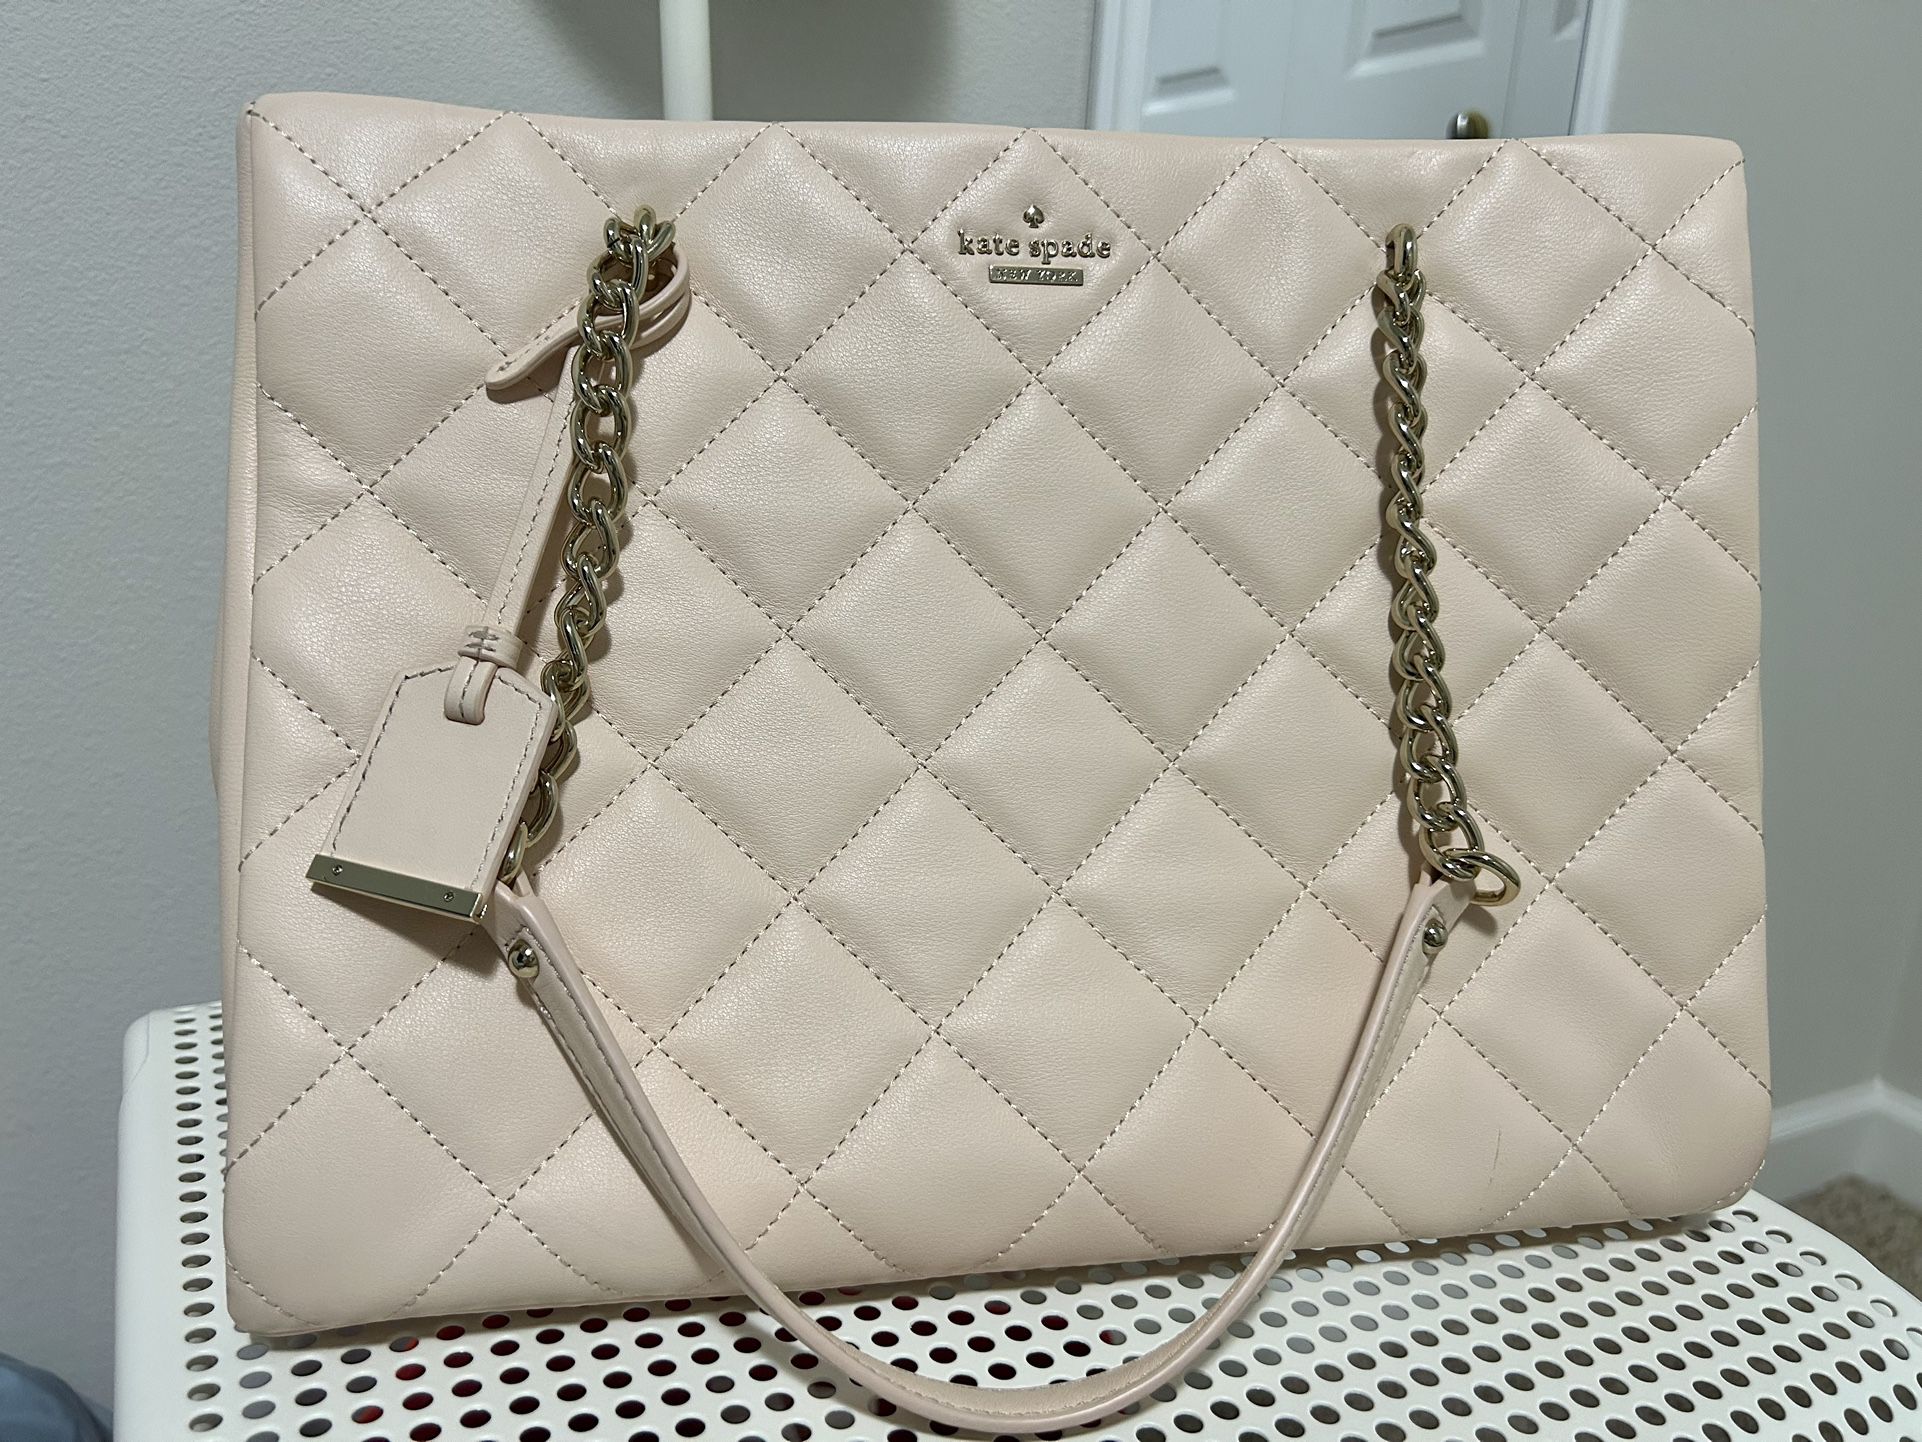 Kate Spade Pink Square Leather Handbag